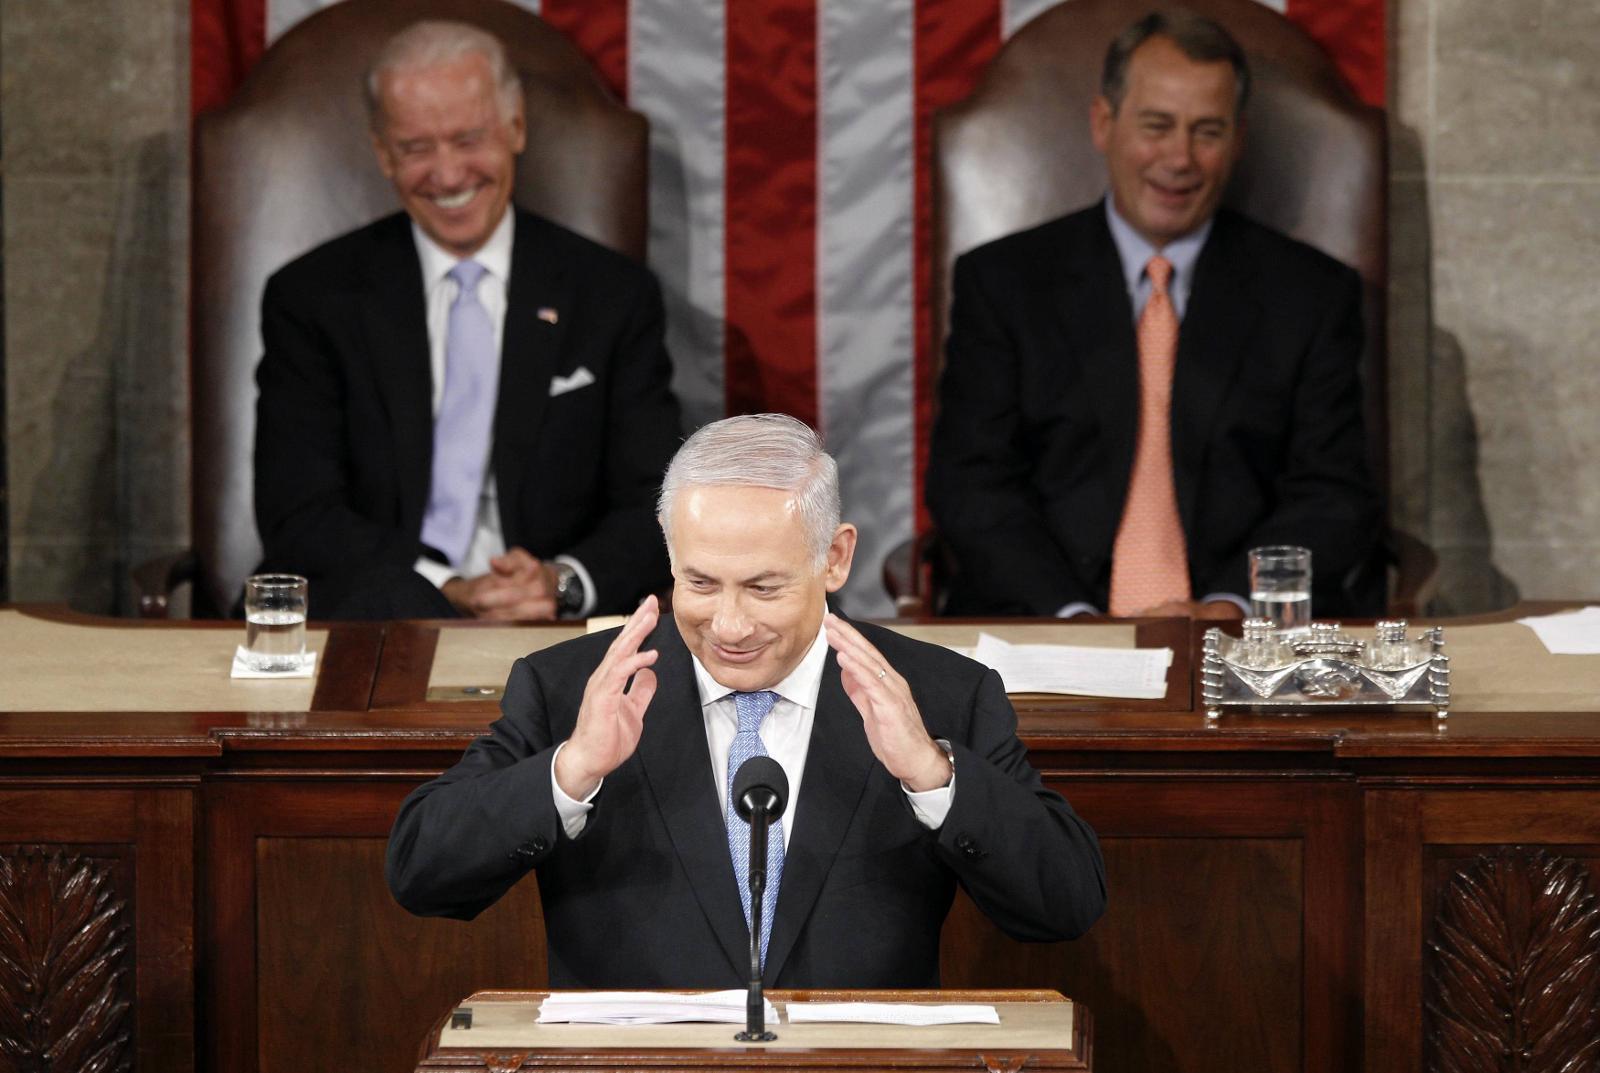 Mai 2011: Benjamin Netanyahu har talt i den amerikanske kongressen før.